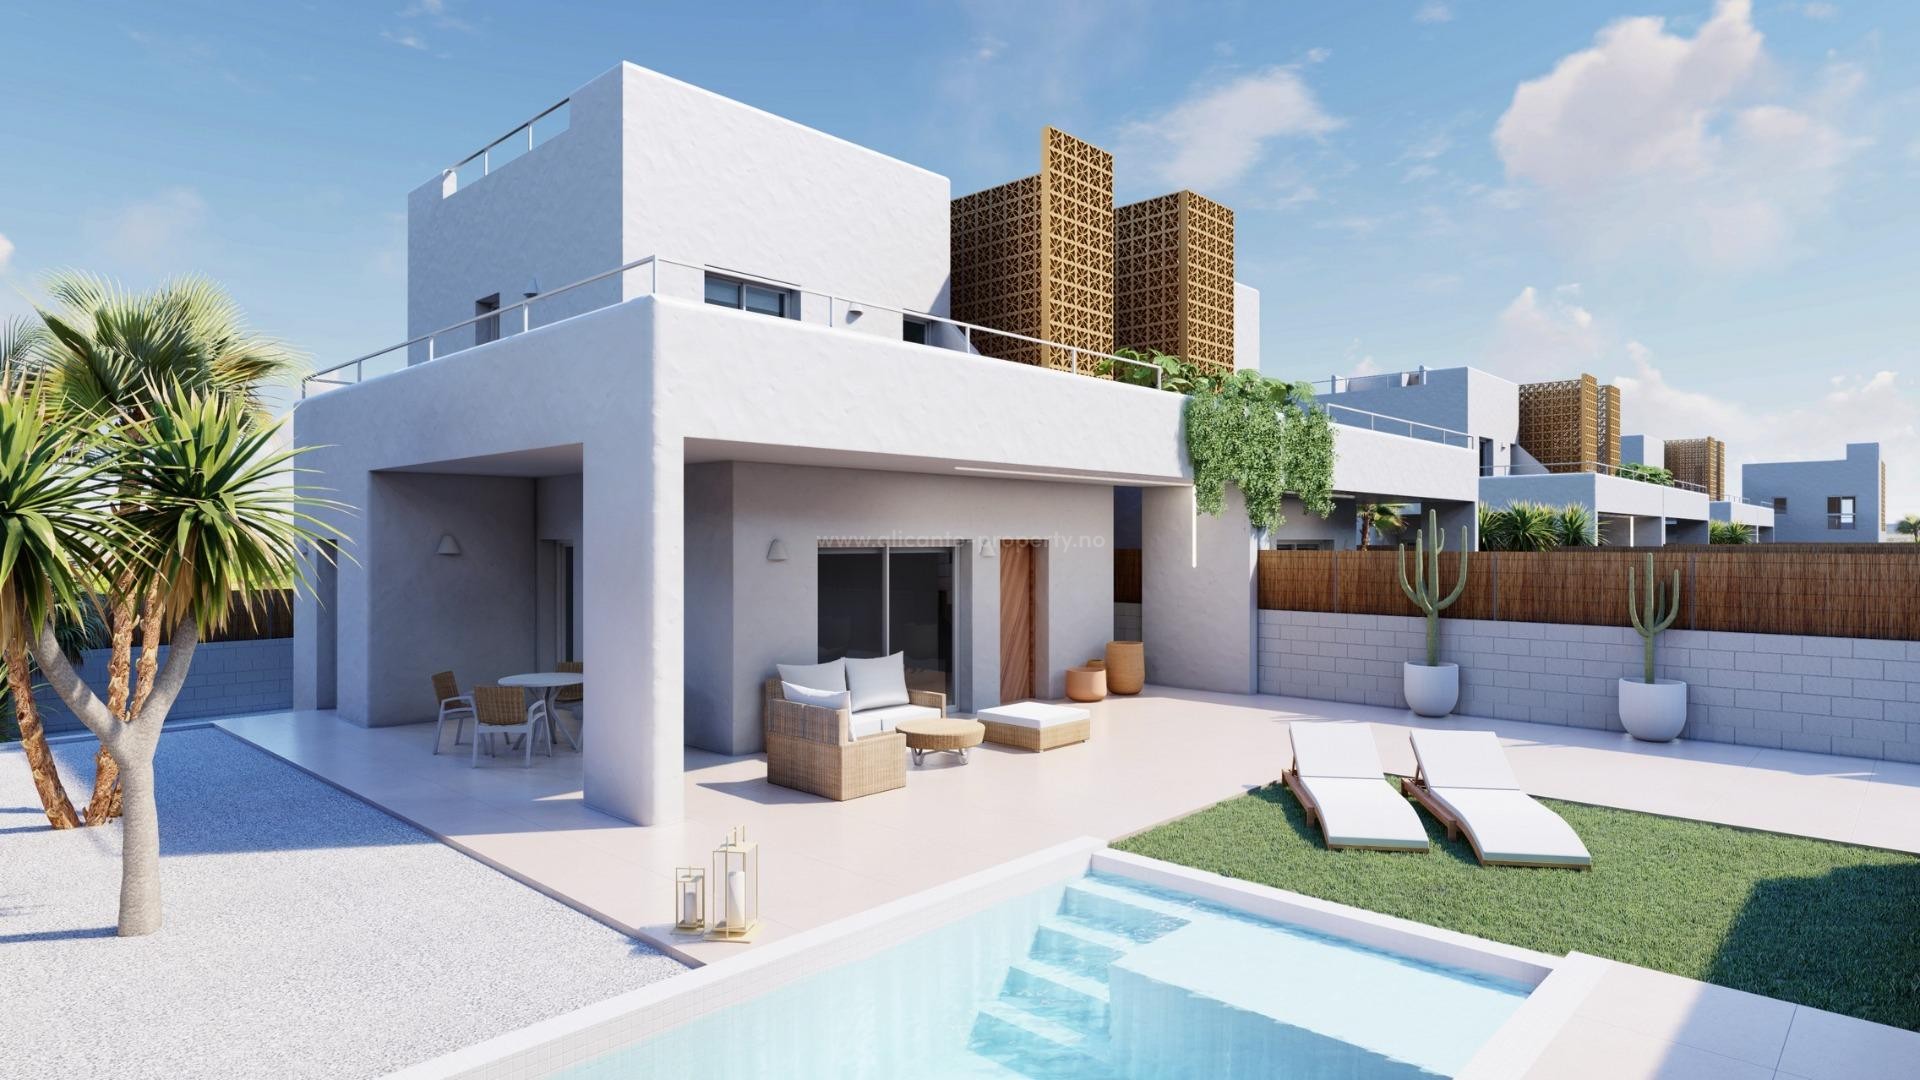 Eksklusive hus/villaer i Pilar de La Horadada med 3 sovrom, 3 bad, hage med privat svømmebasseng, stor terrasse og parkeringsplass